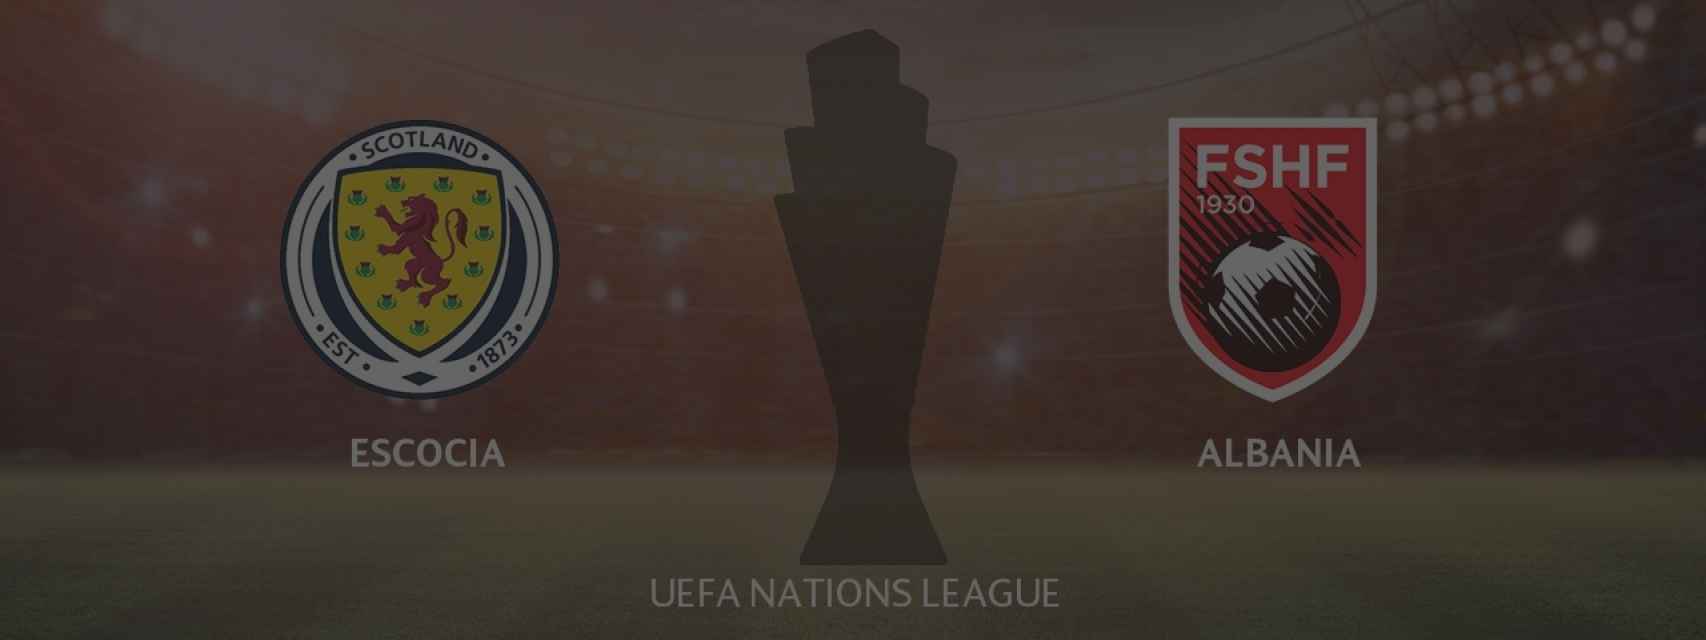 Escocia - Albania, UEFA Nations League